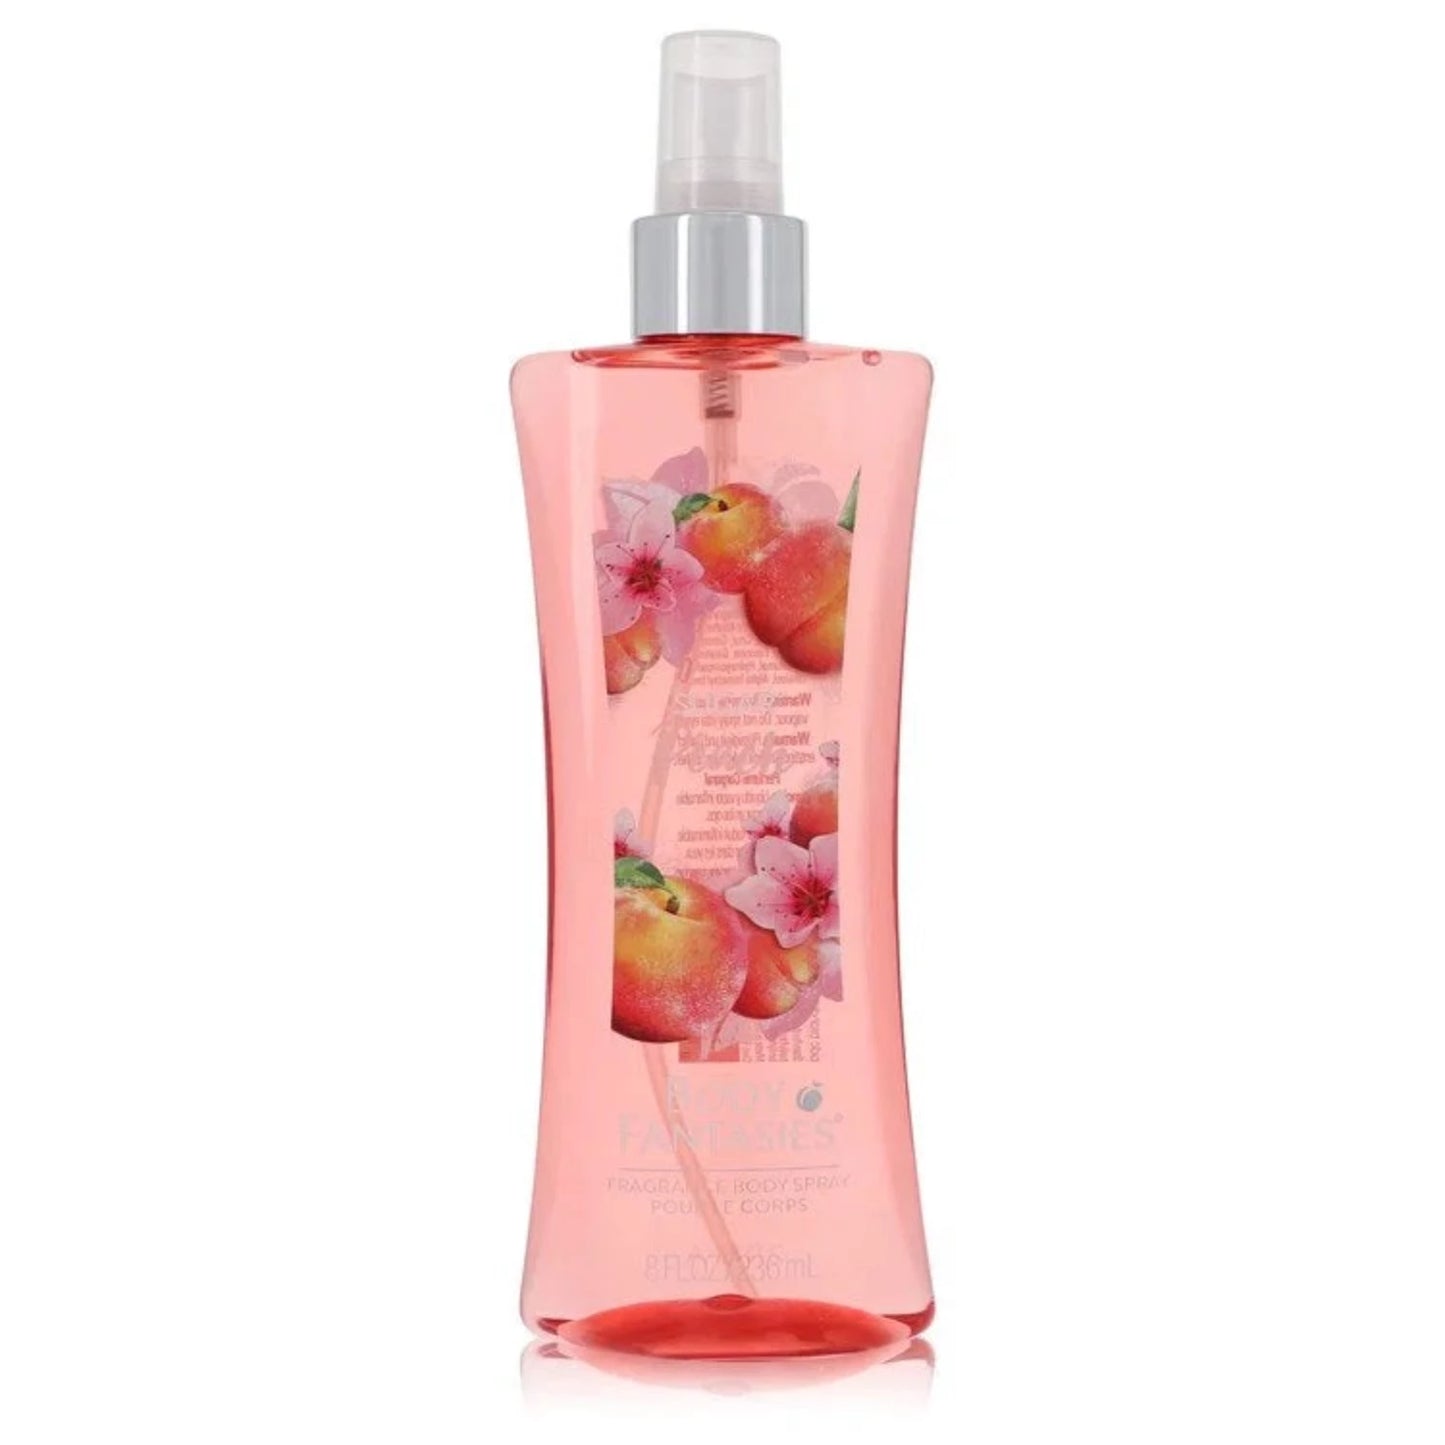 Body Fantasies Signature Sugar Peach Body Spray By Parfums De Coeur for women